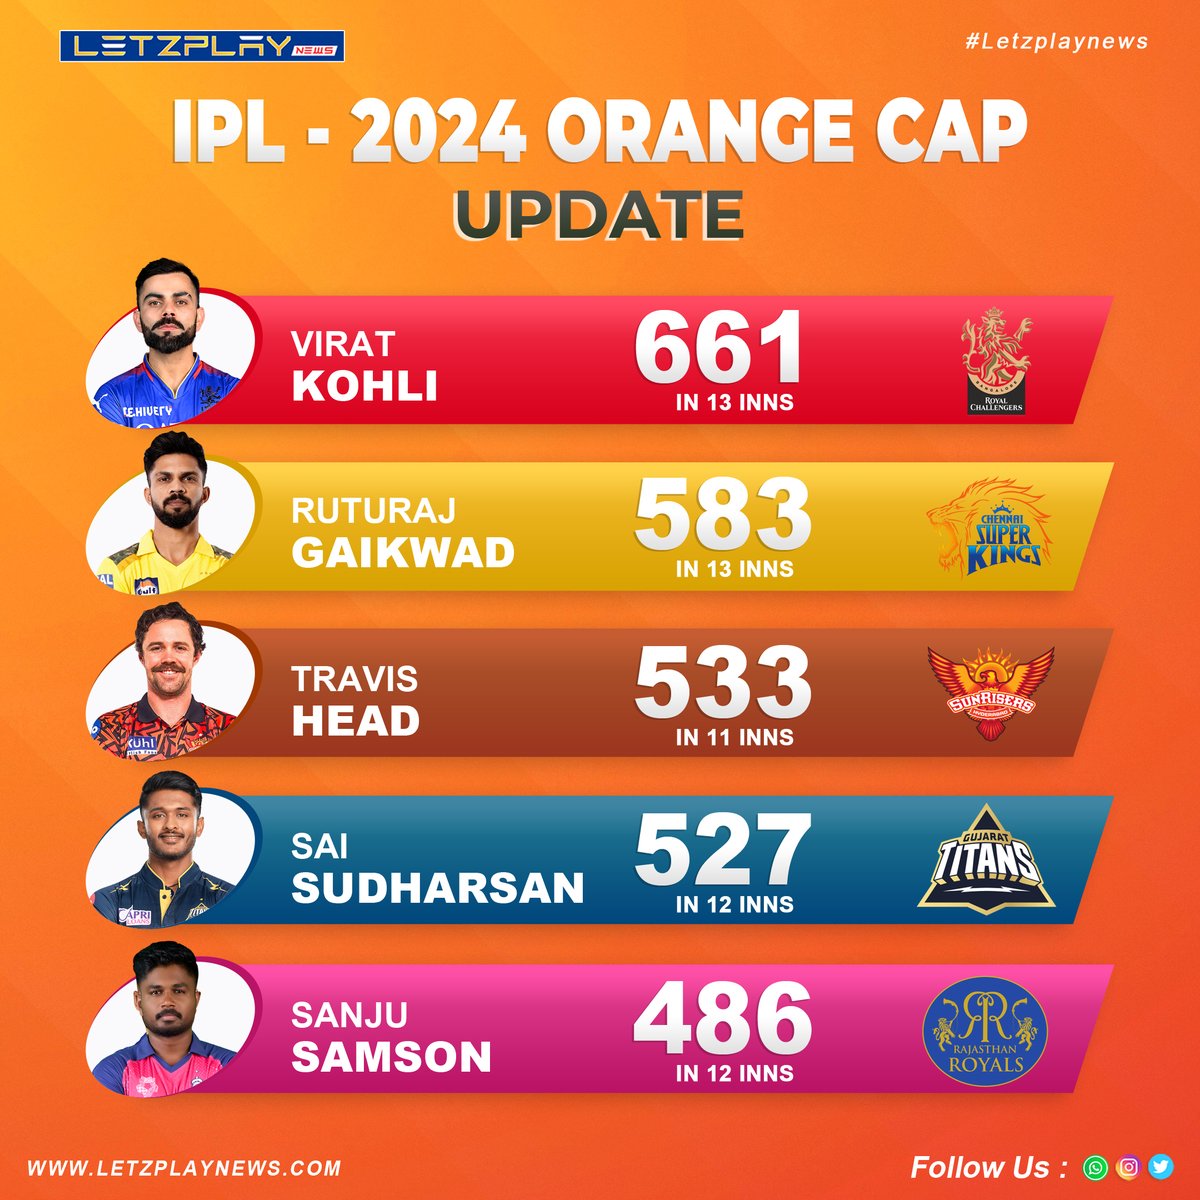 🟠 Sai Sudersan joins the elite club of Orange Cap holders, making waves in IPL 2024! 🌟 

Keep an eye on this rising star as he lights up the field! 
.
.
.
.
#SaiSudersan #iplupdates #sports #livematch #news #newsupdate #OrangeCap #IPL2024 #CricketFever #RisingStar 🏏🔥